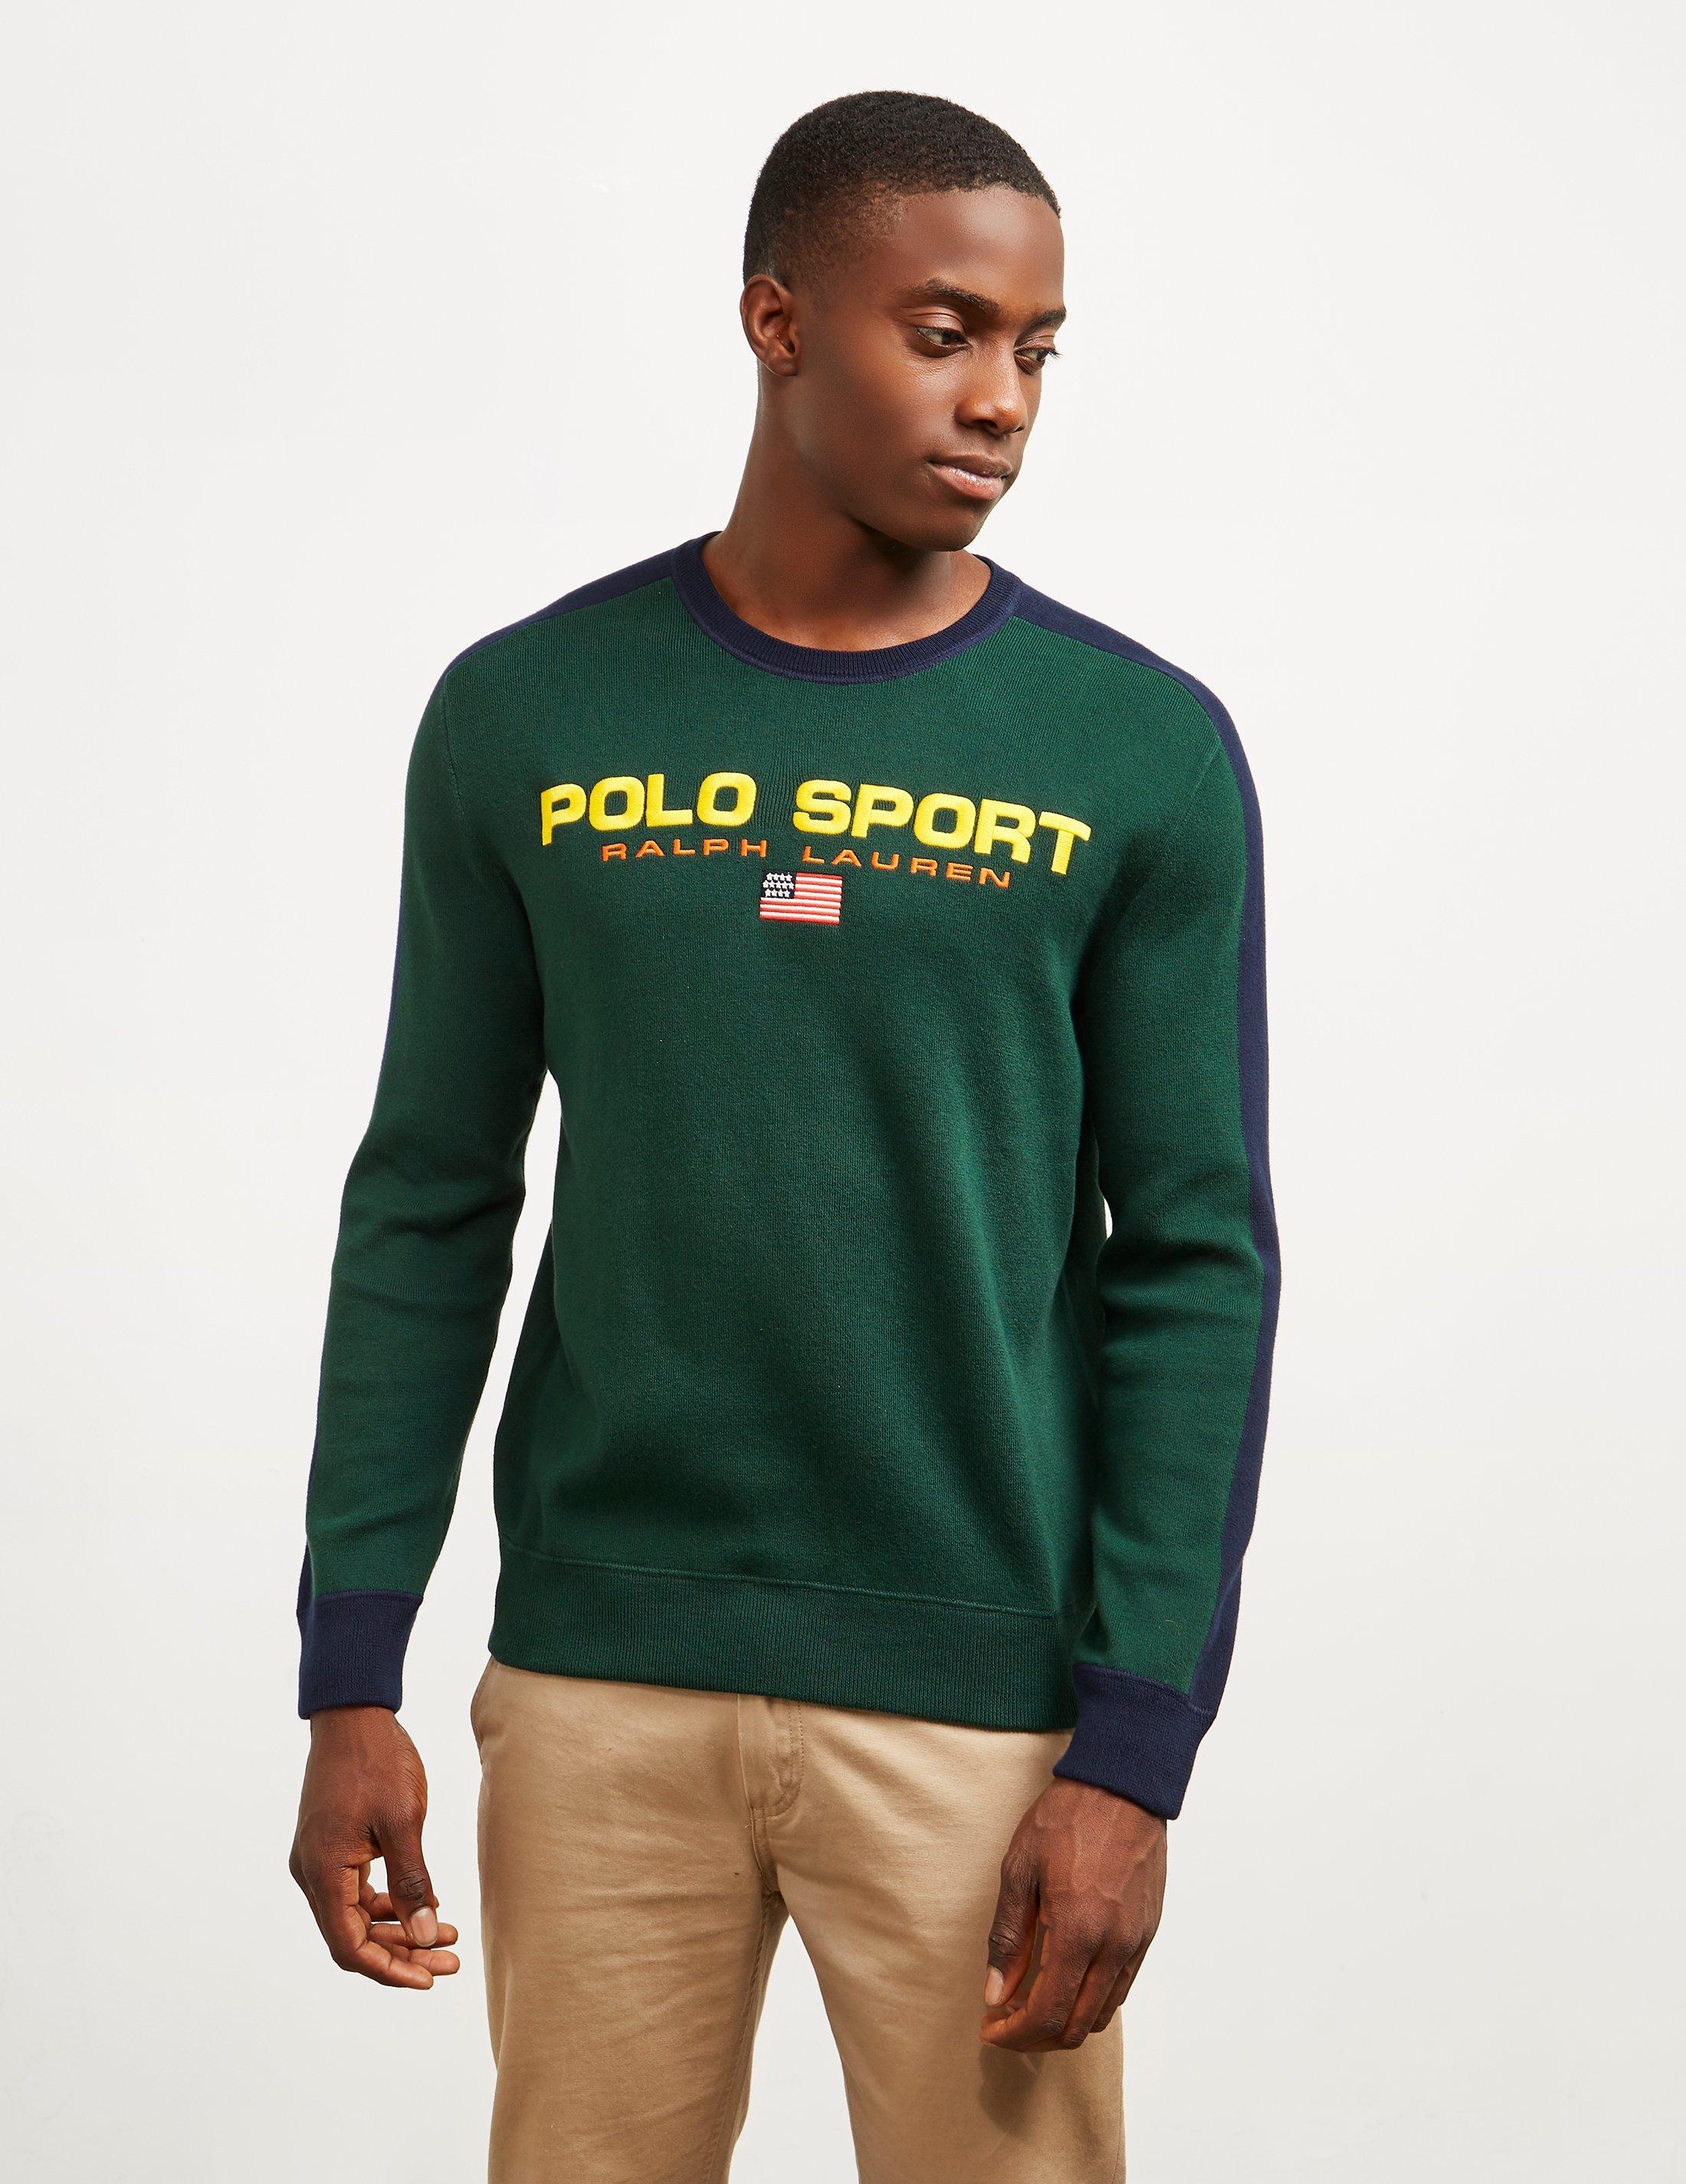 polo sport jumper